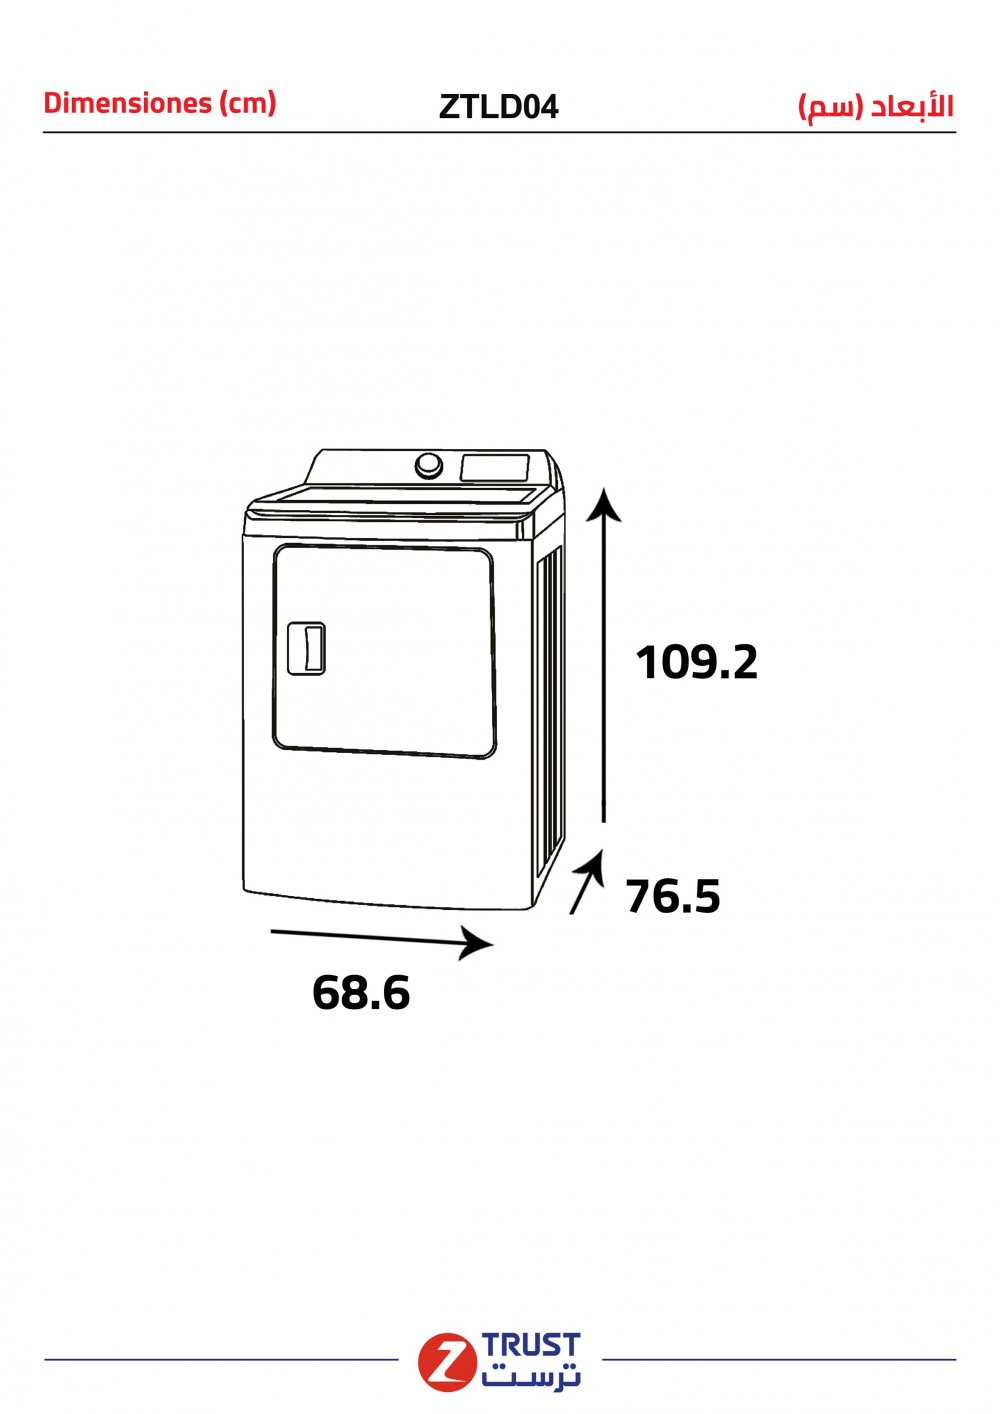 Dryer 12K,10Prg, - Wht